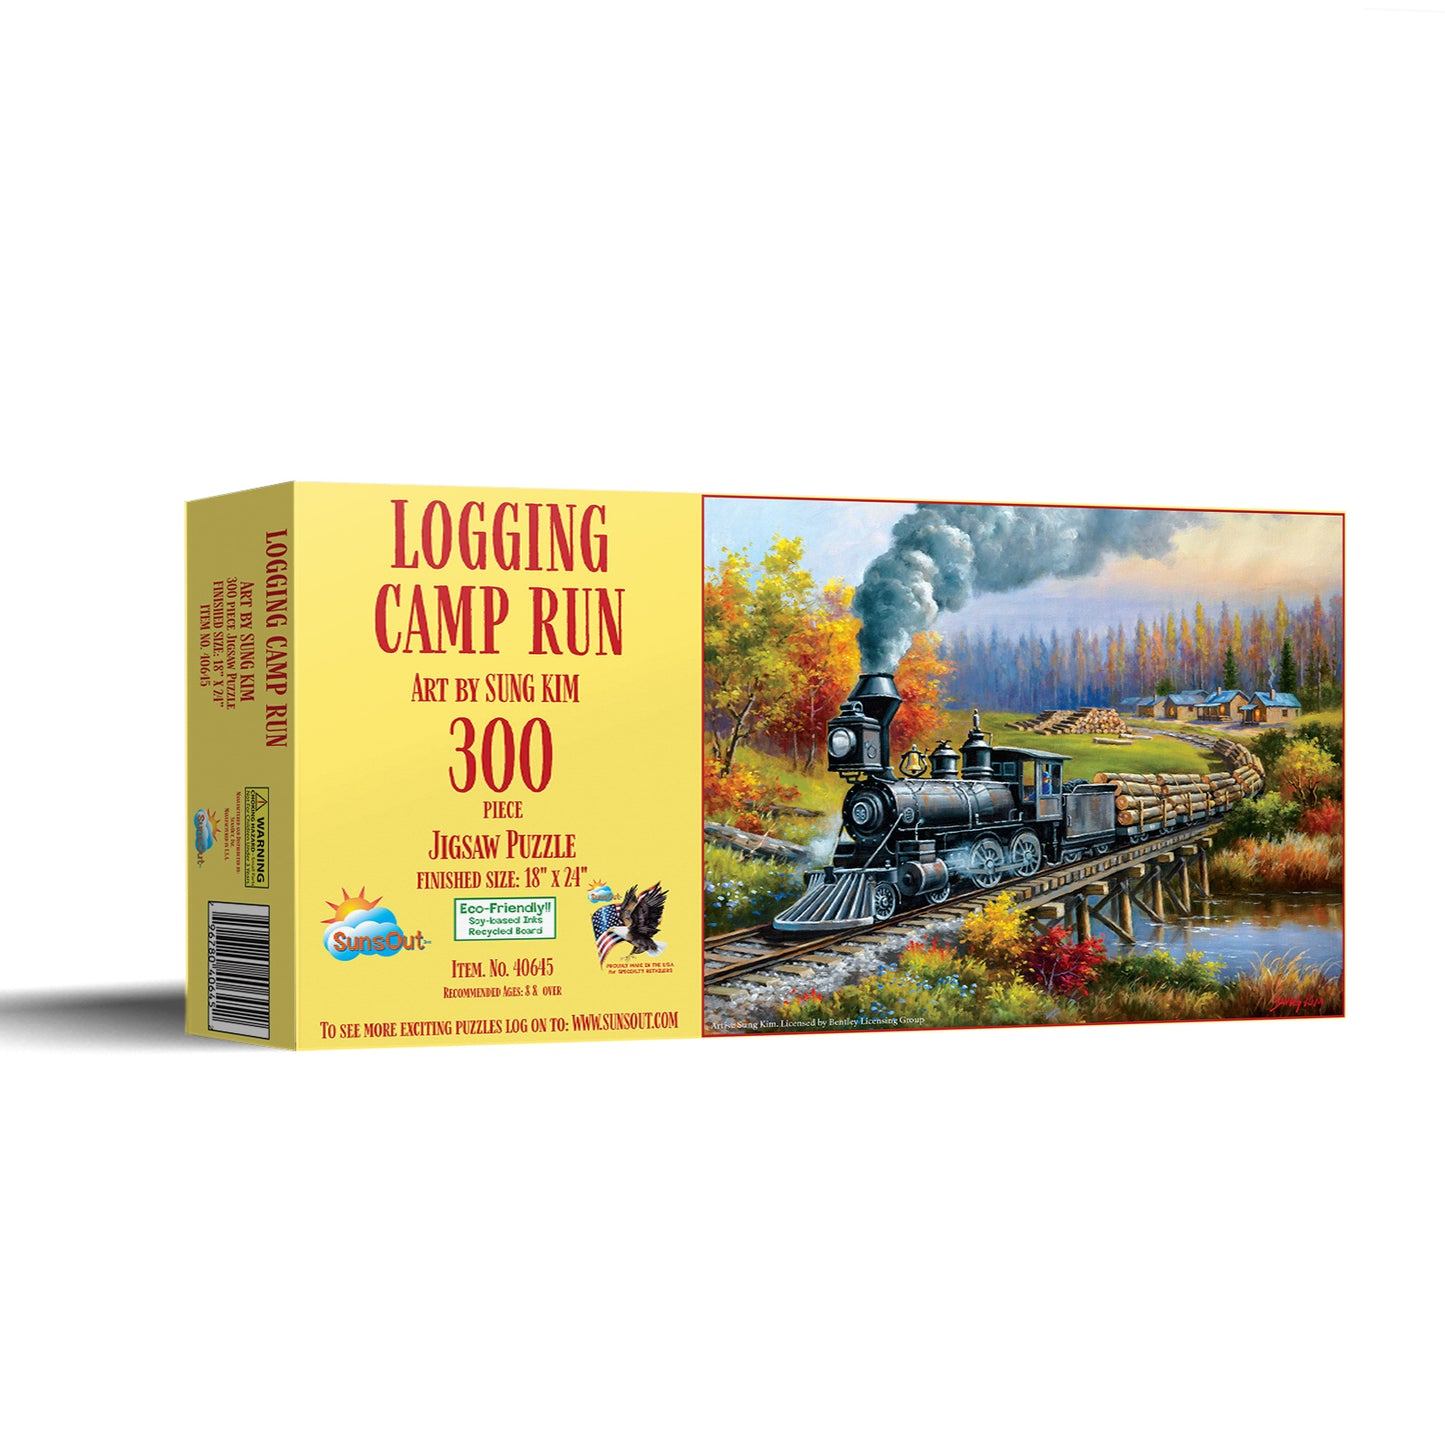 Logging Camp Run - 300 Piece Jigsaw Puzzle